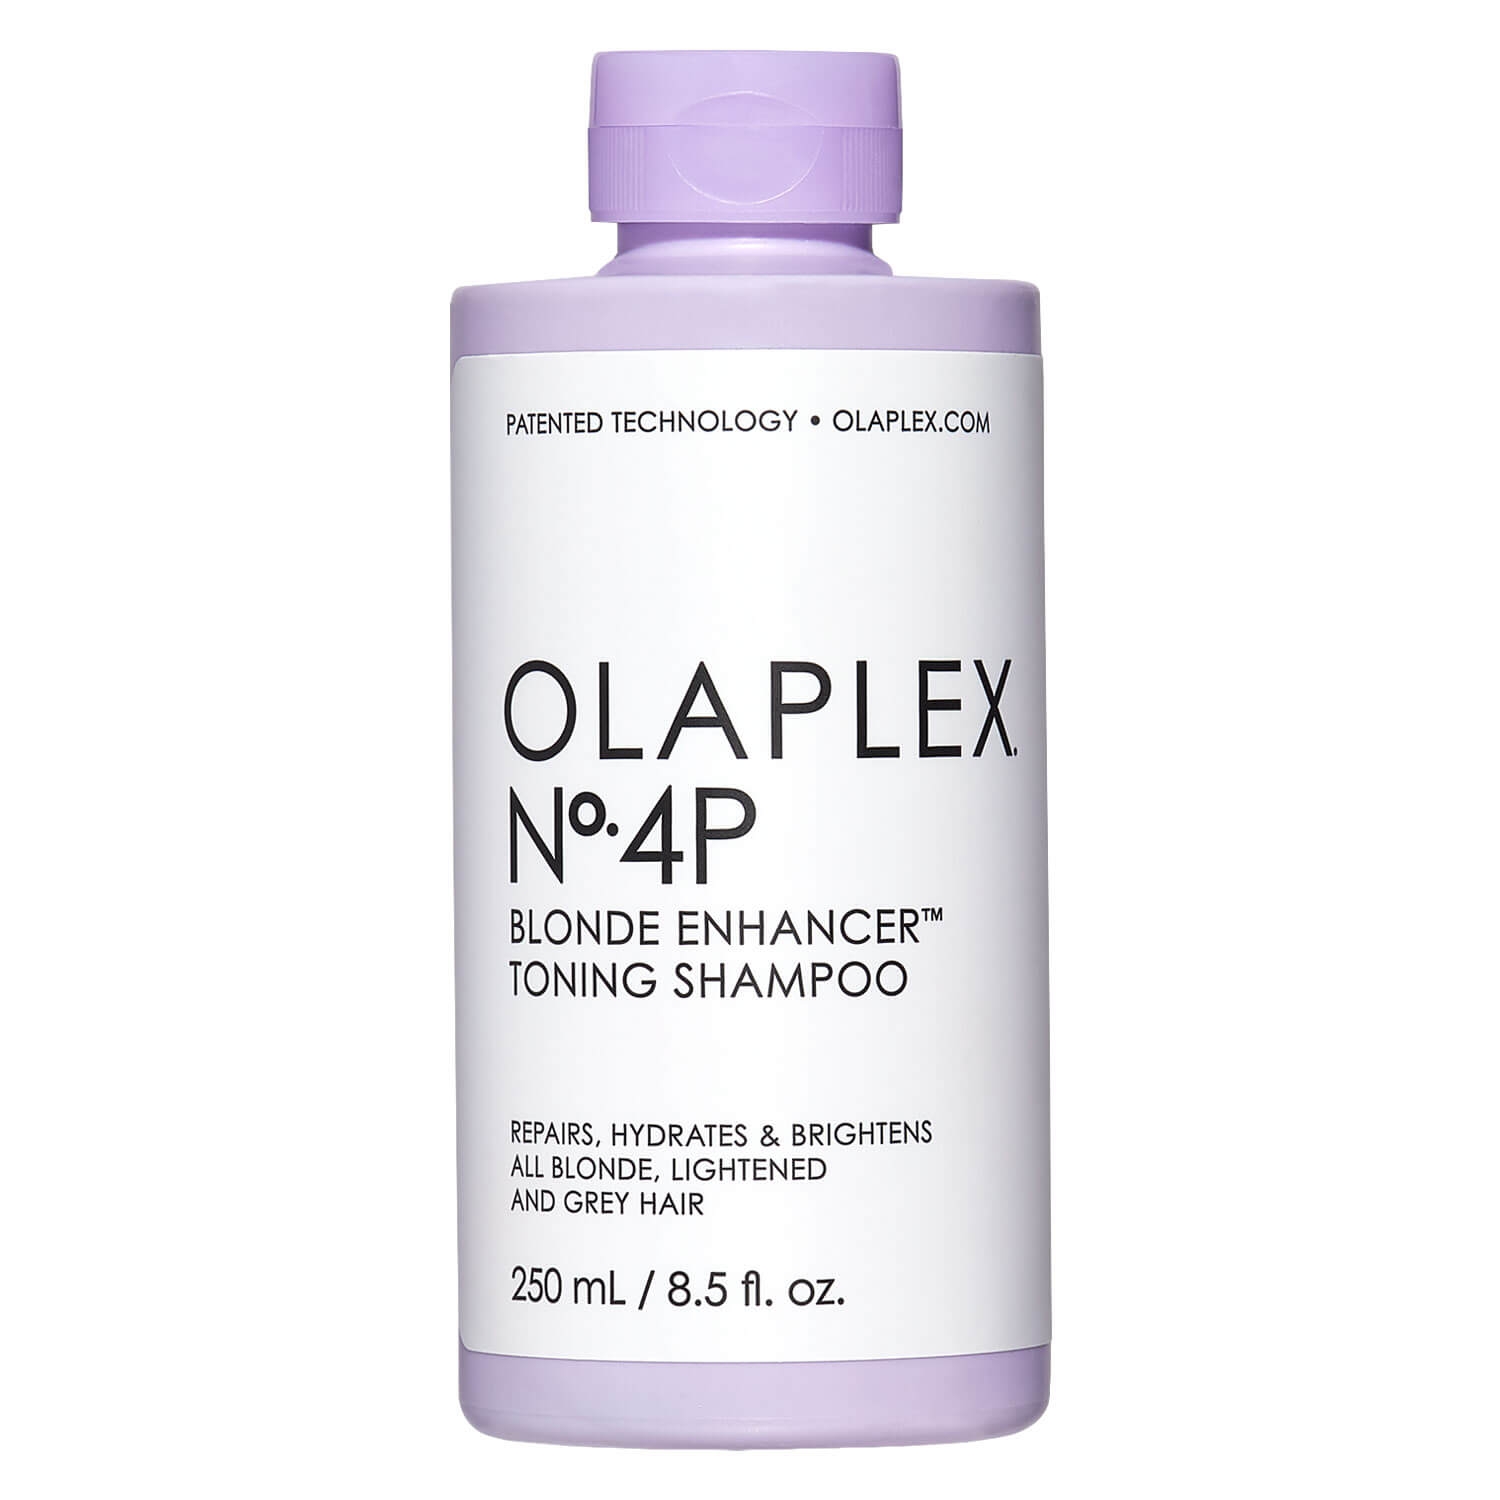 Image du produit de Olaplex - Blonde Enhancer Toning Shampoo No. 4P